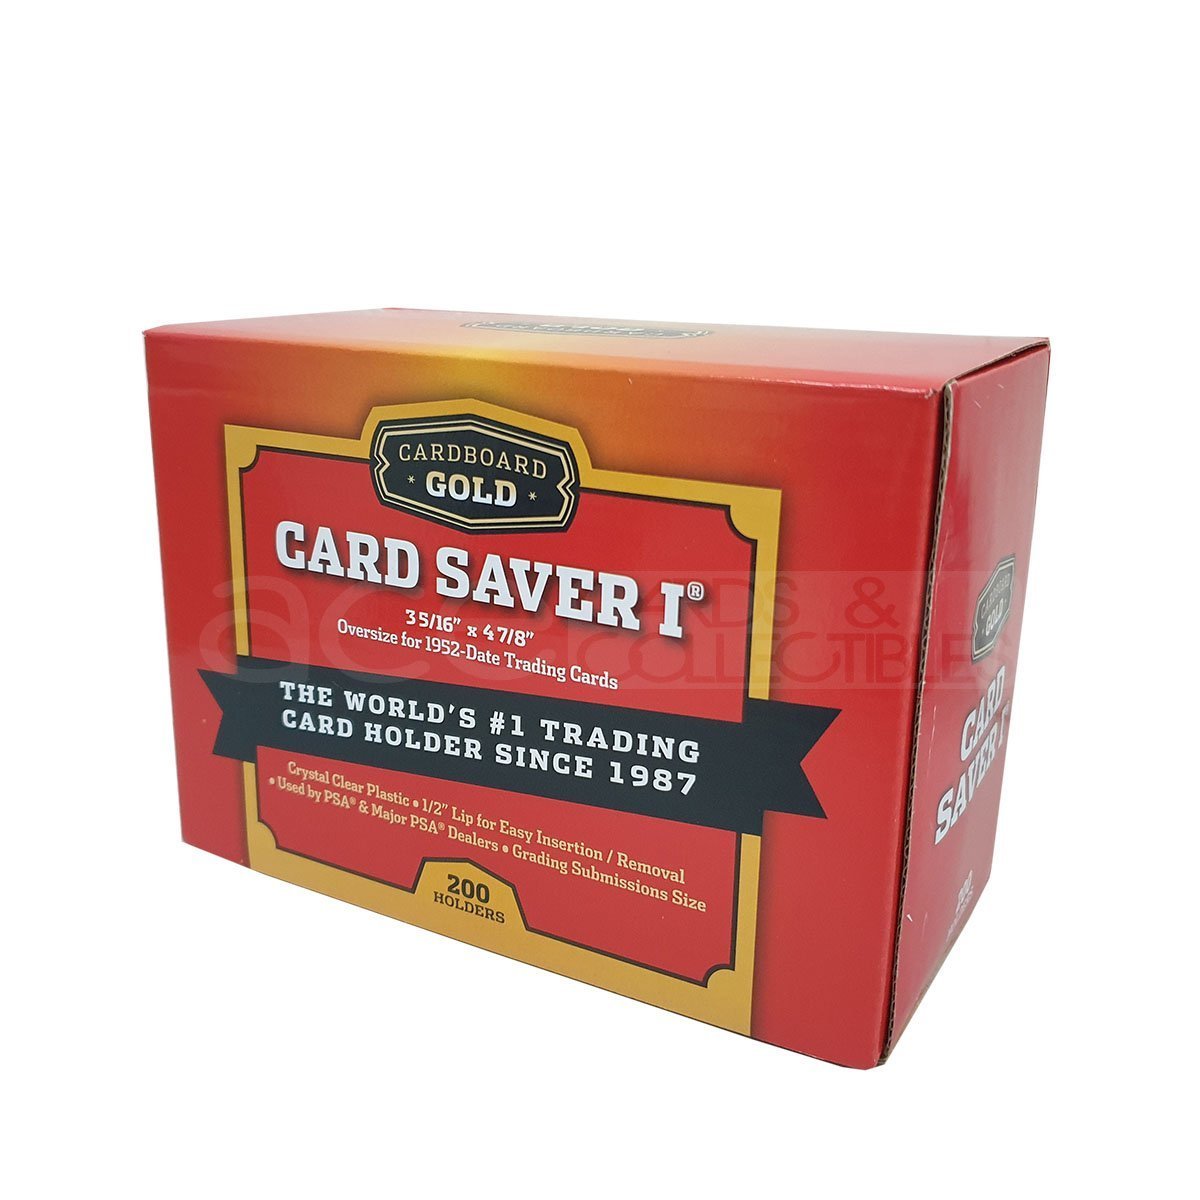 Card Saver 1 Semi Rigid Holder Box of 200